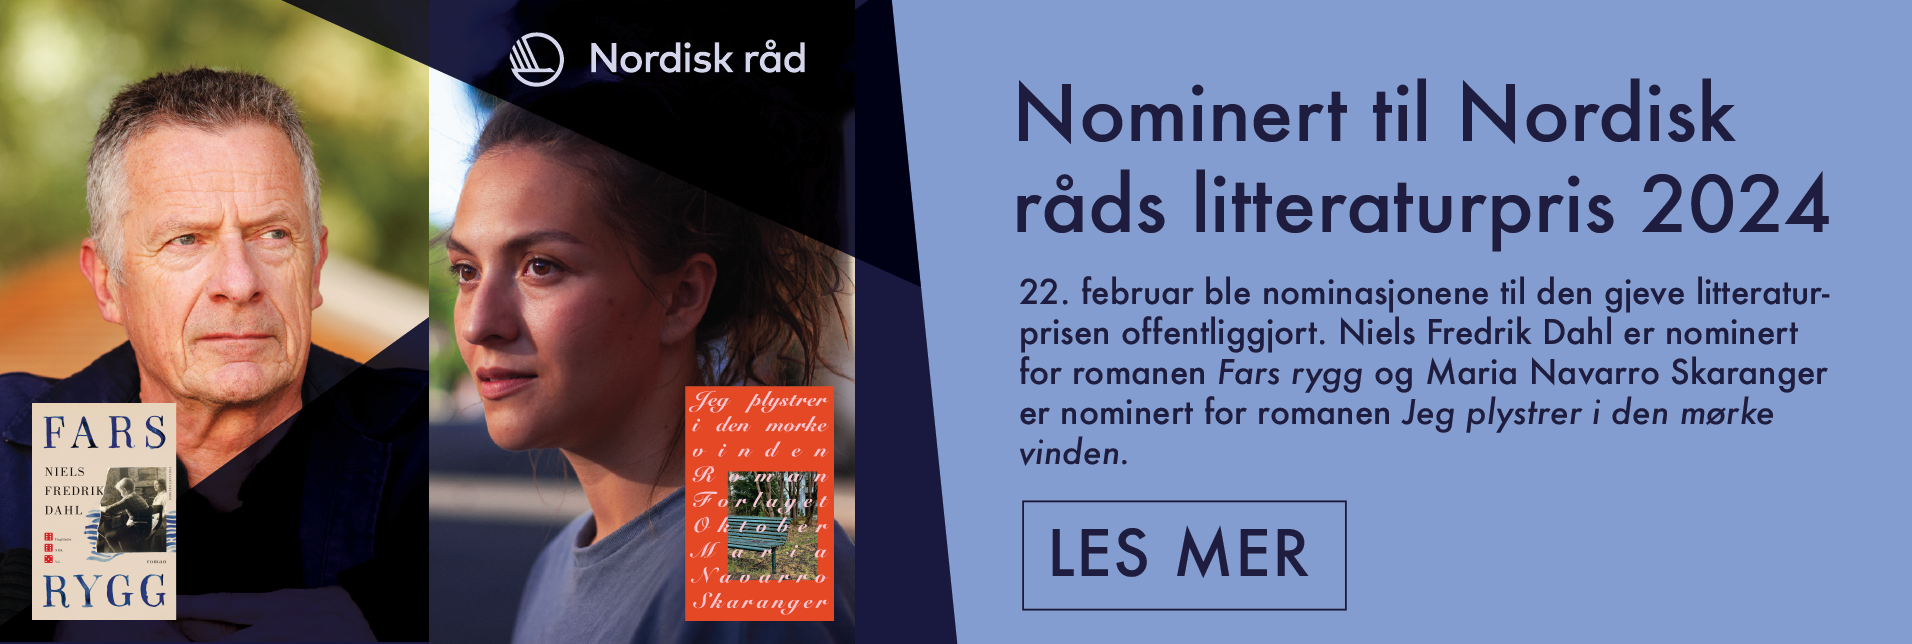 Niels Fredrik Dahl og Maria Navarro Skaranger nominert til Nordisk råds litteraturpris 2024